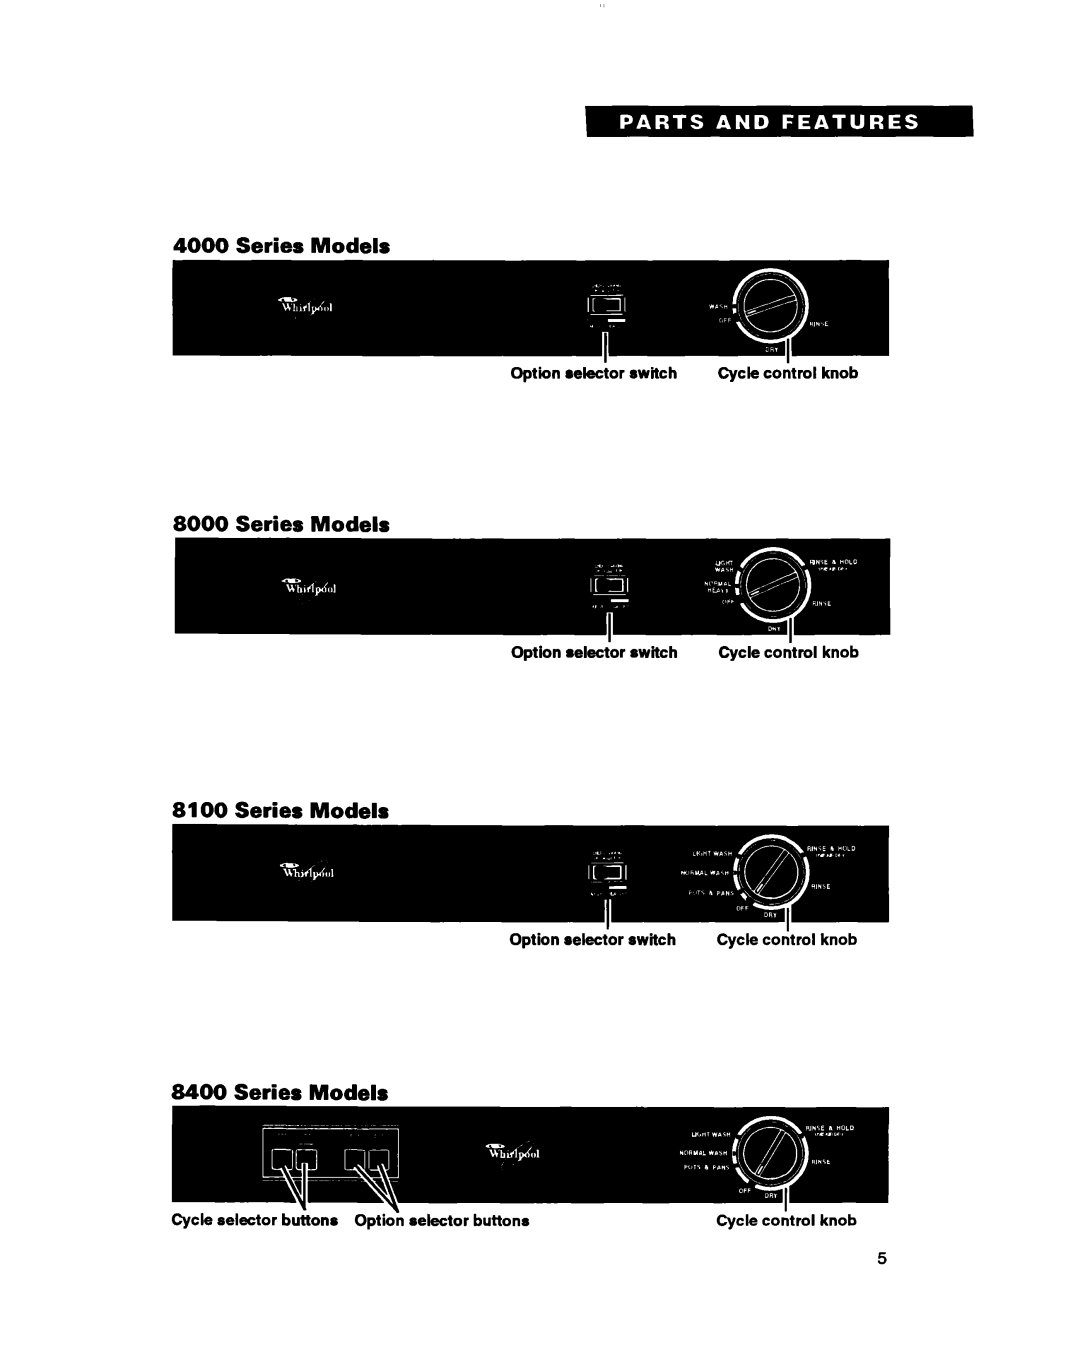 Whirlpool DU8400, DU4000, DU8100, DU8000 warranty Series Models, Option se&or, switch, Cycle co trol, knob 